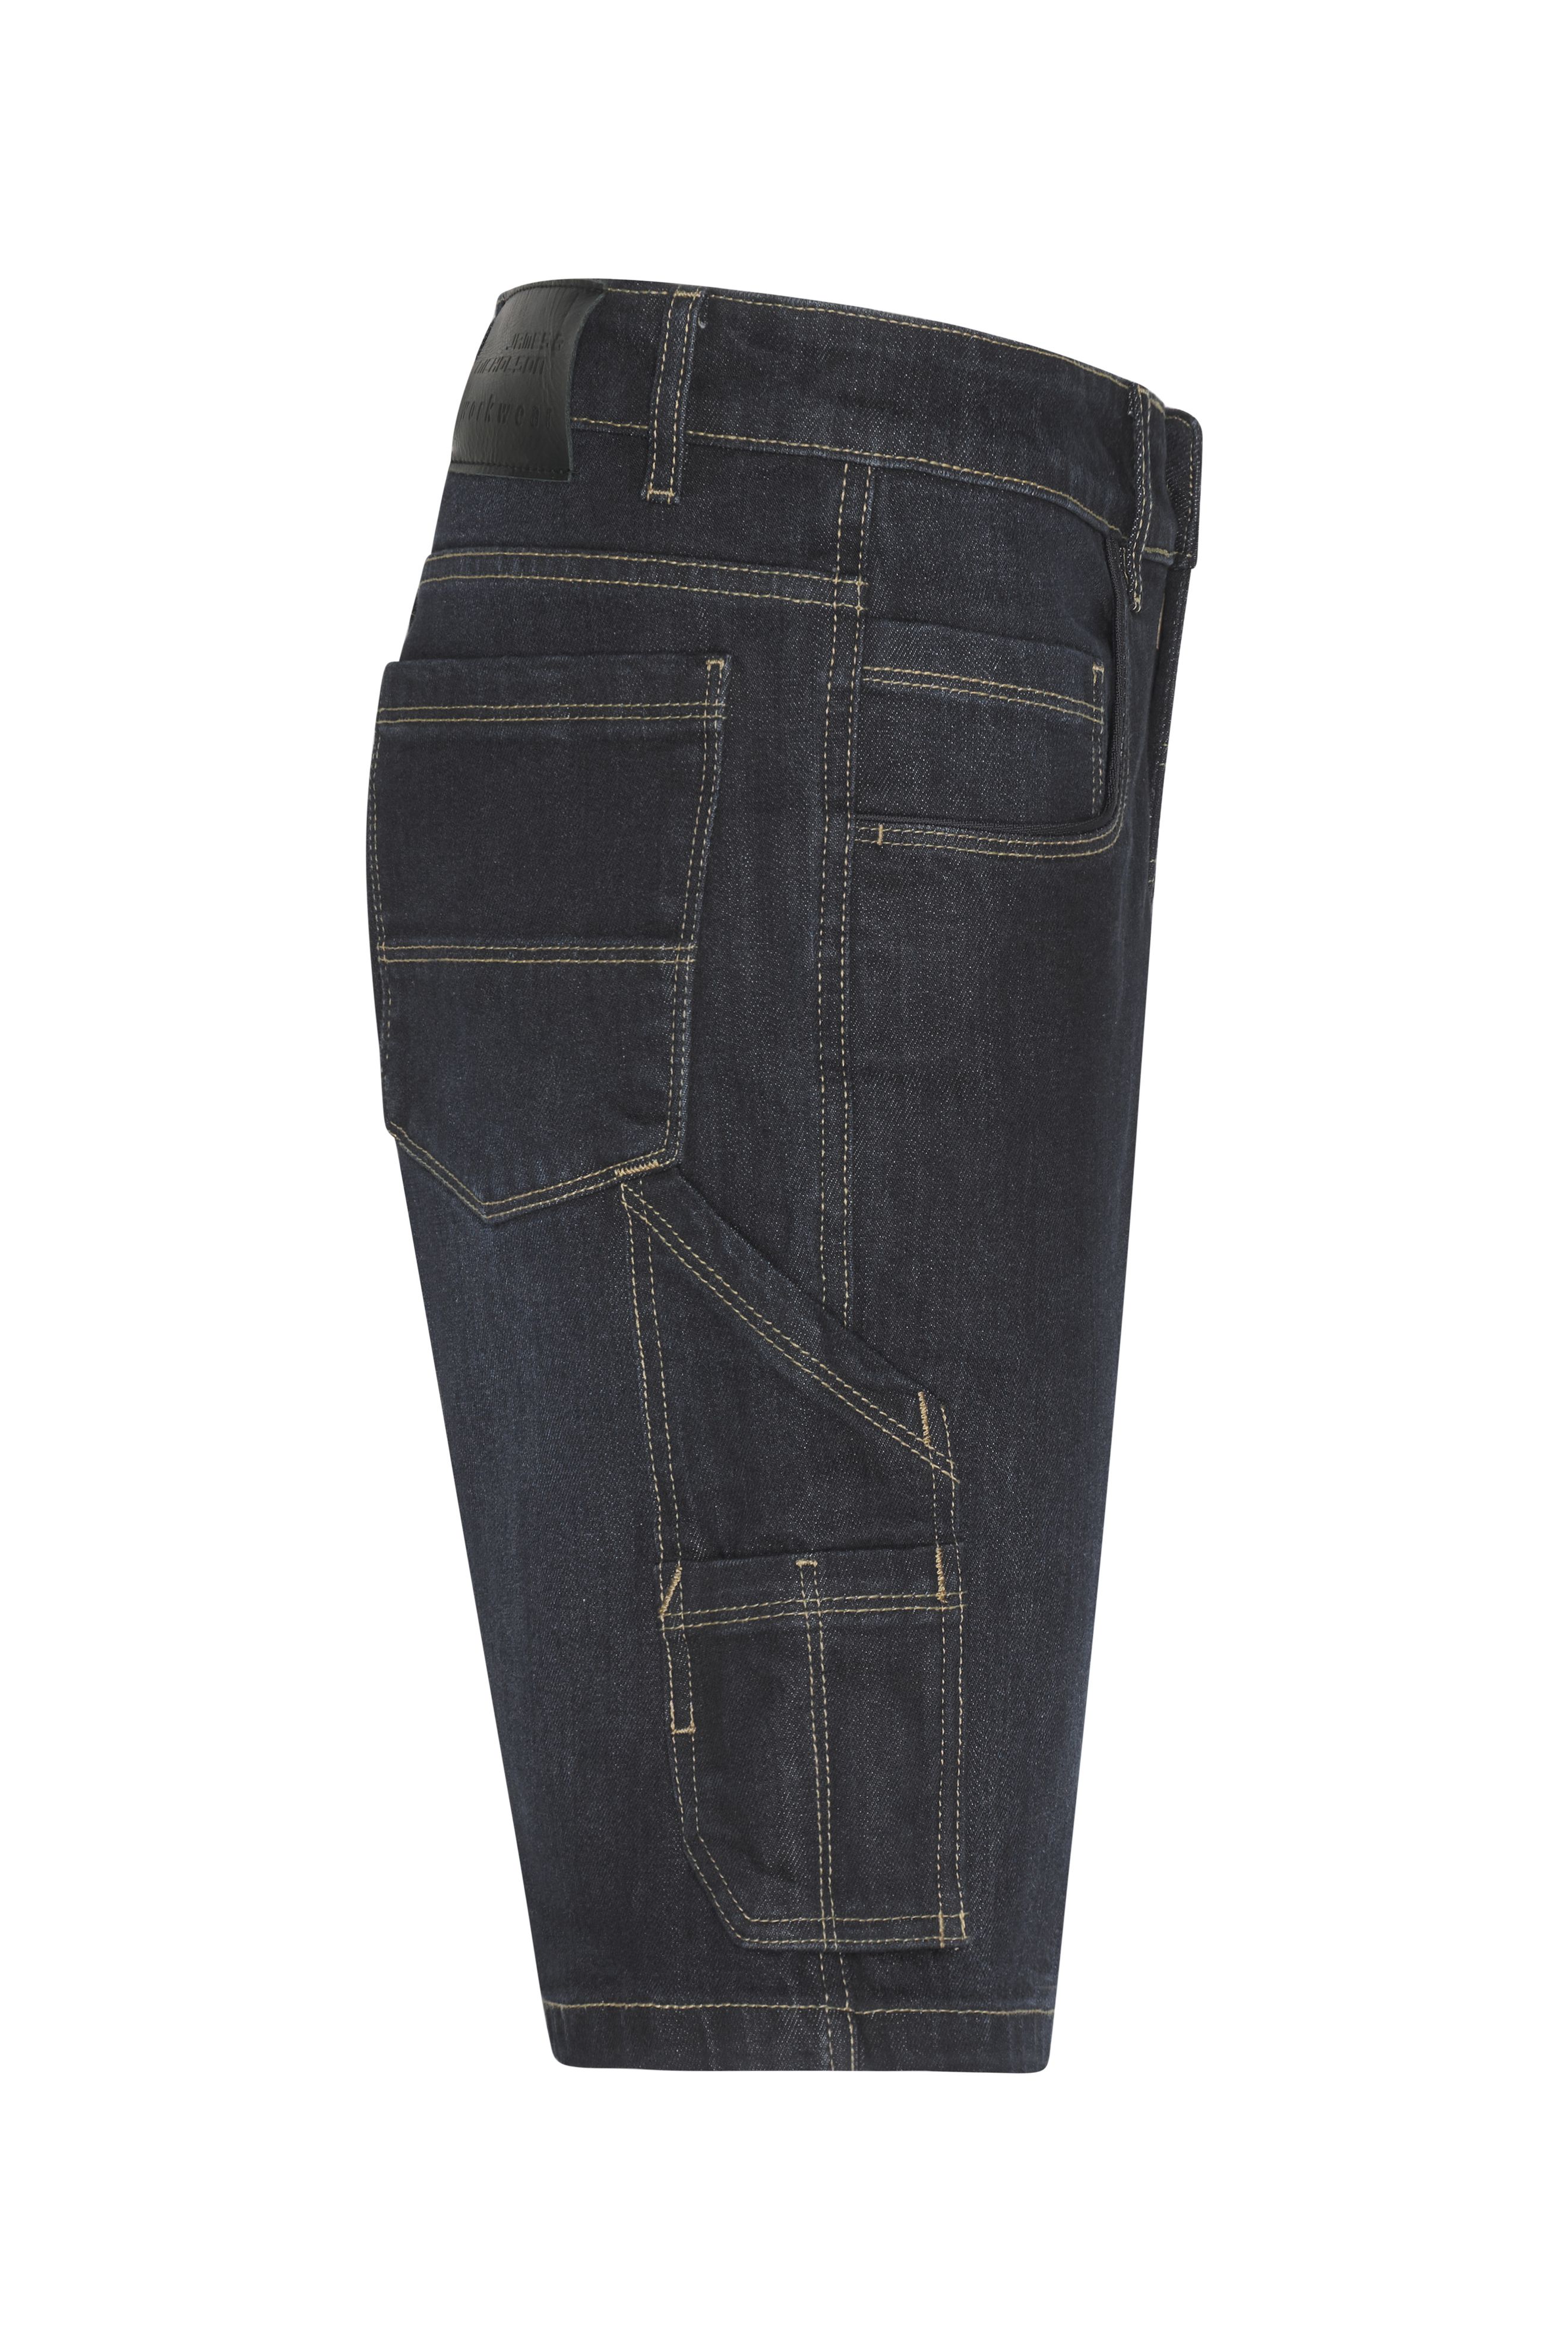 Workwear Stretch-Bermuda-Jeans JN871 Kurze Jeans-Hose mit vielen Details